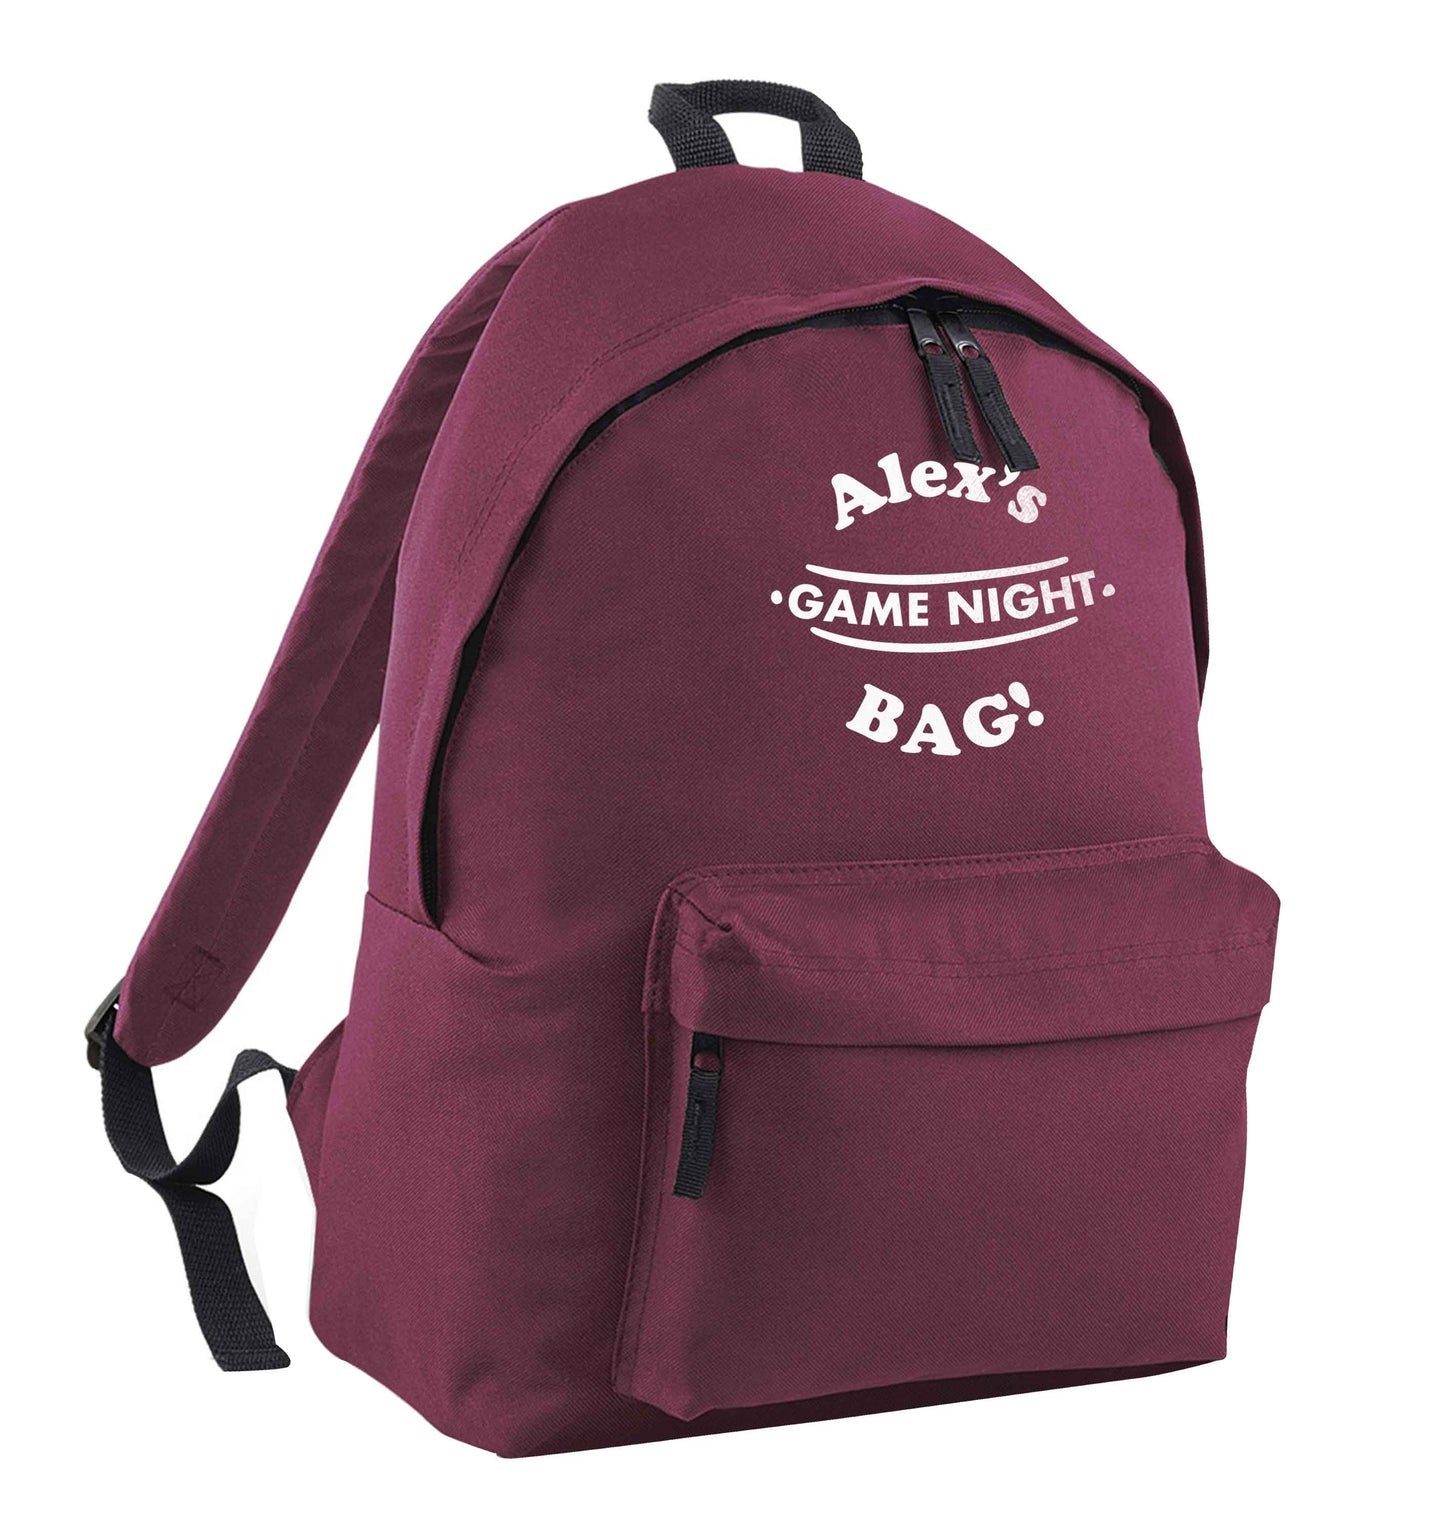 Personalised game night bag maroon adults backpack